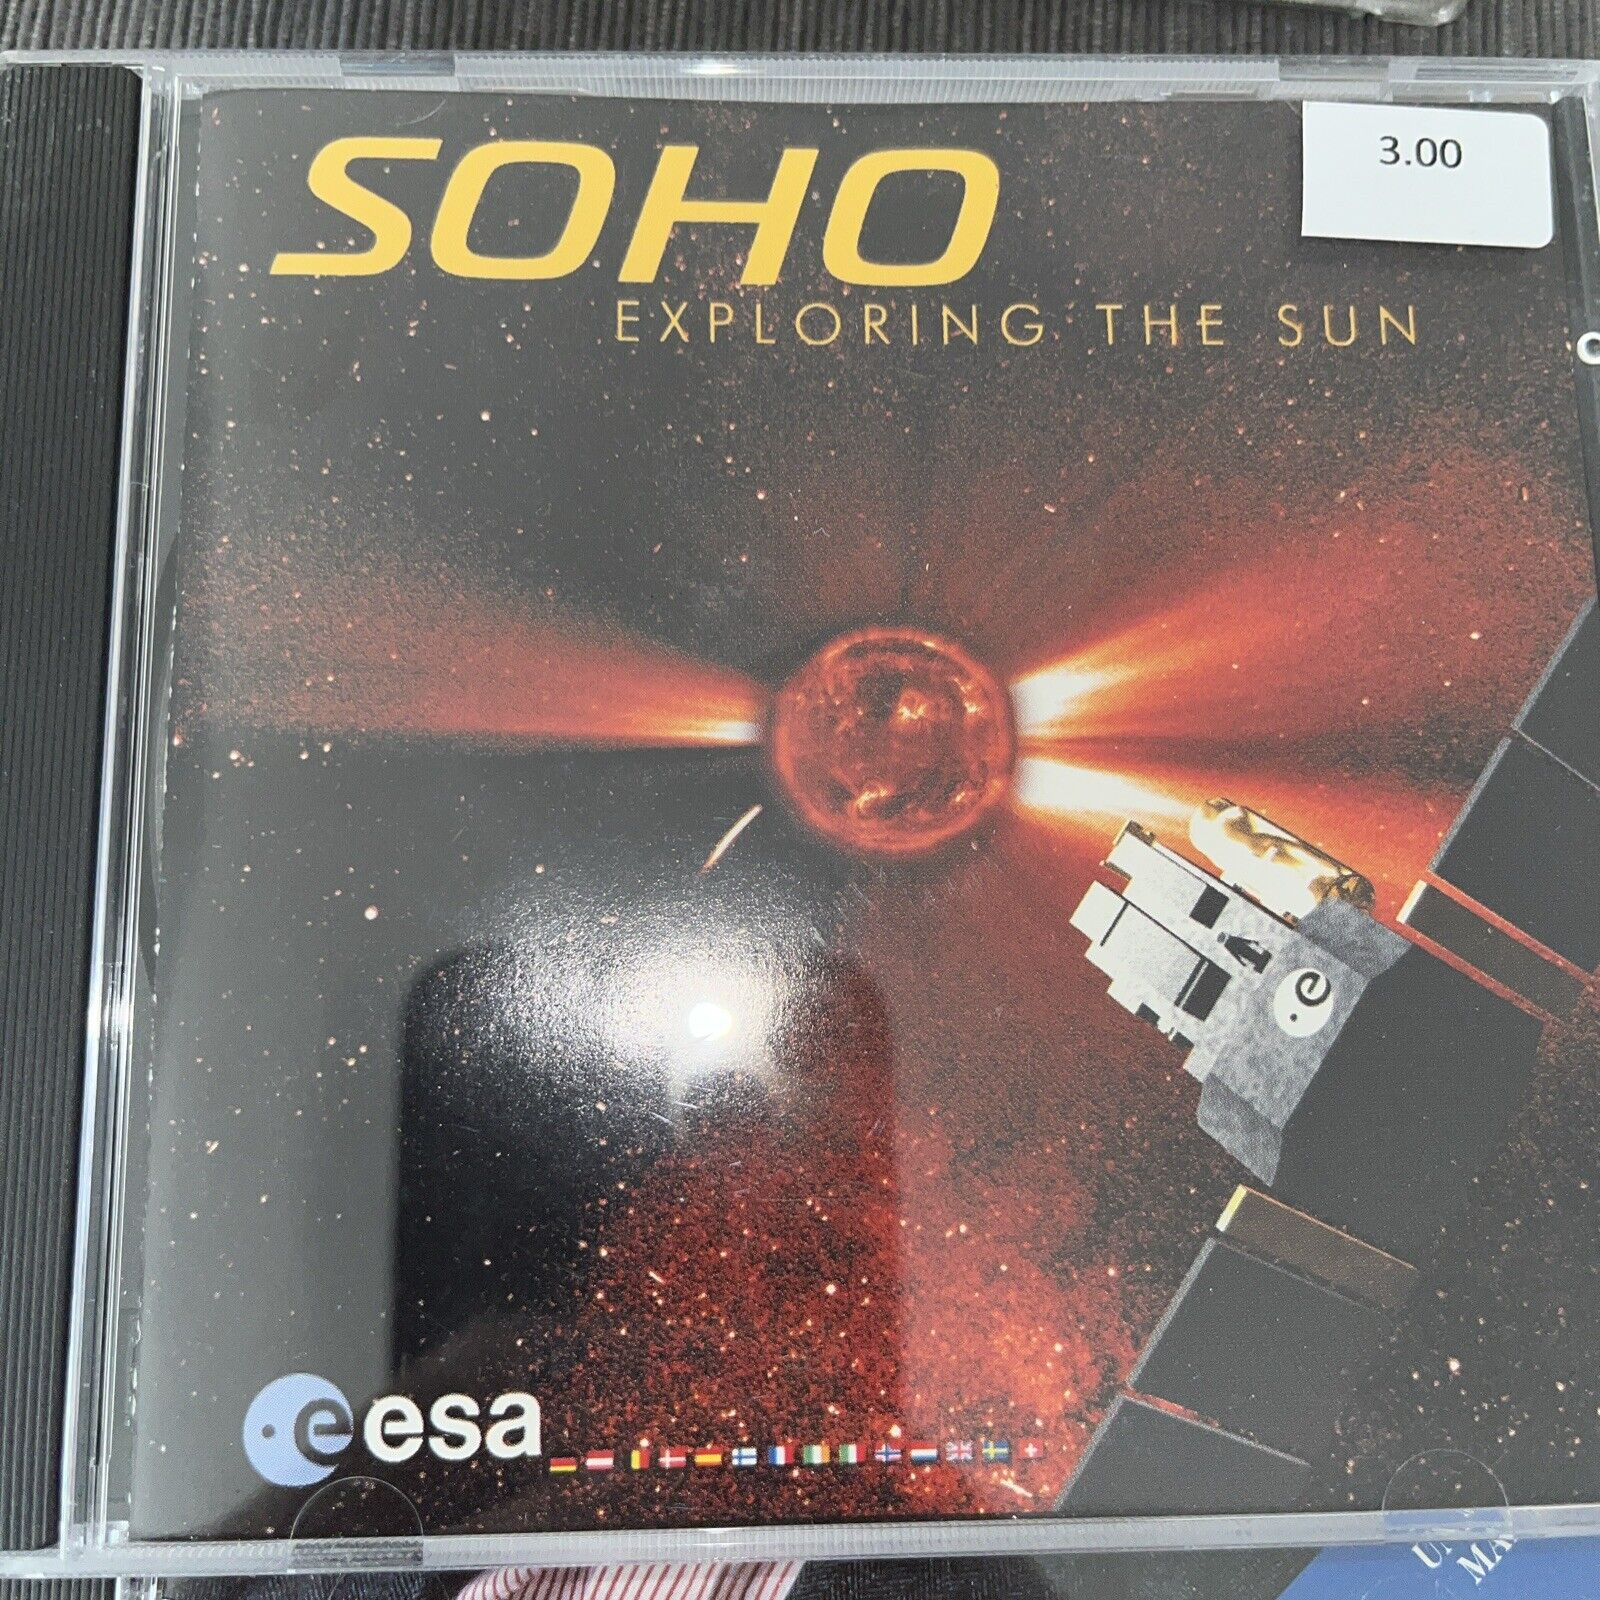 SOHO EXPLORING THE SUN CDROM